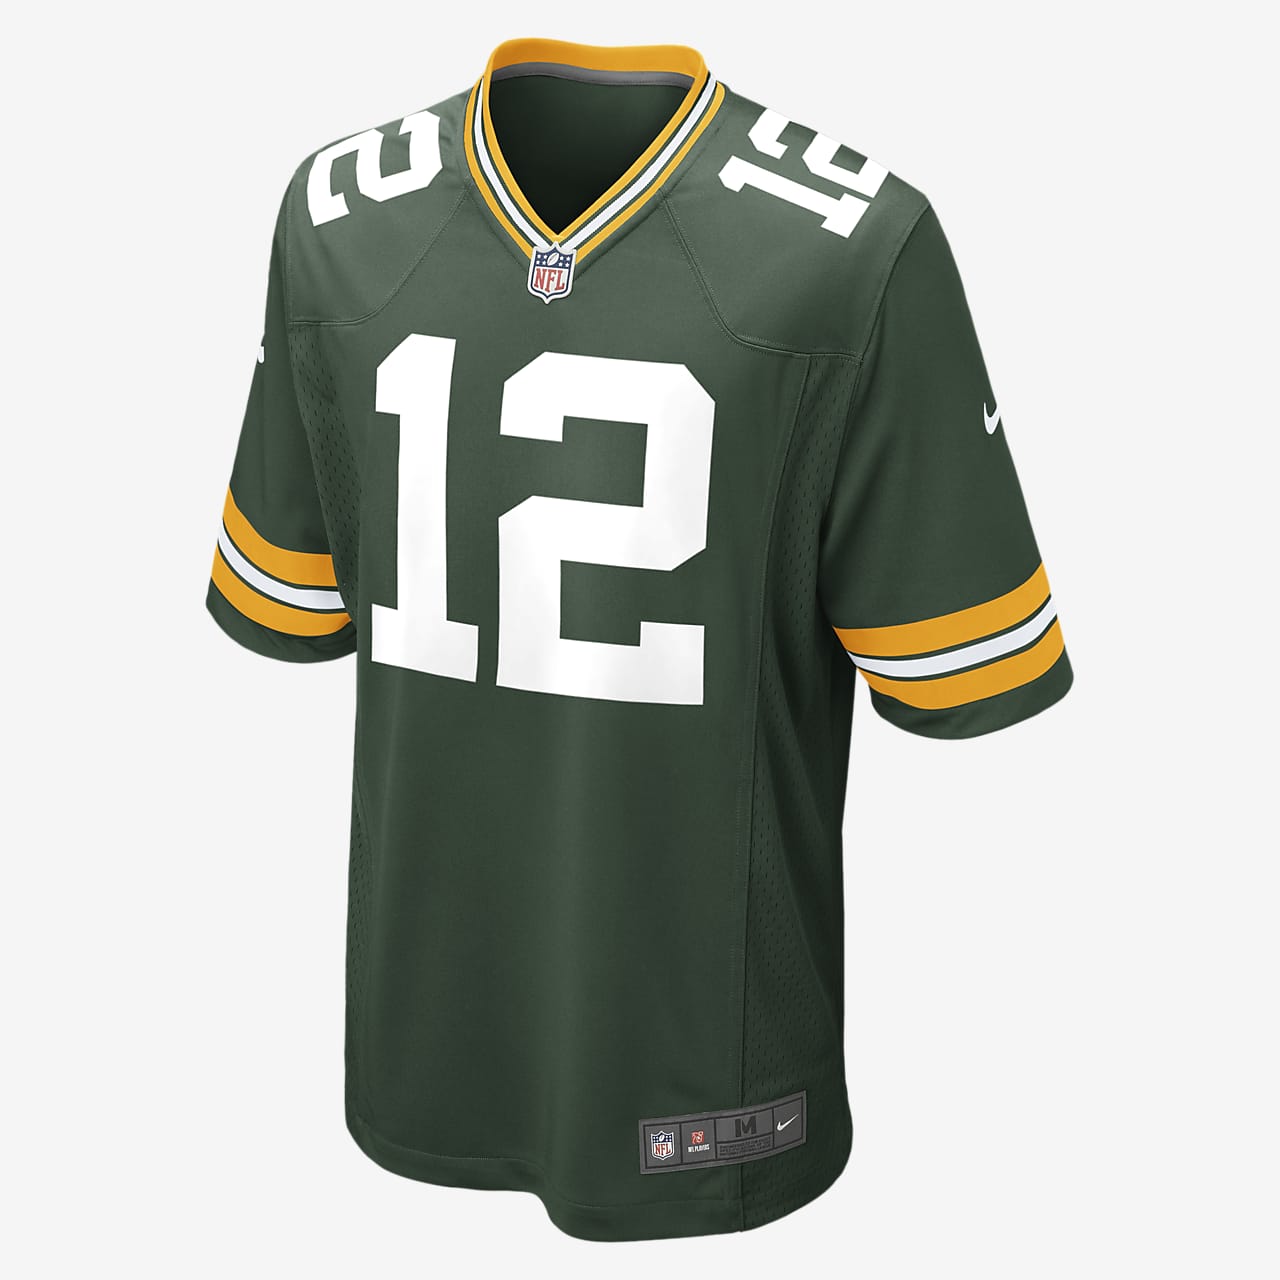 Camiseta oficial de fútbol americano de local para hombre de NFL Green Bay  Packers (Aaron Rodgers). Nike CL